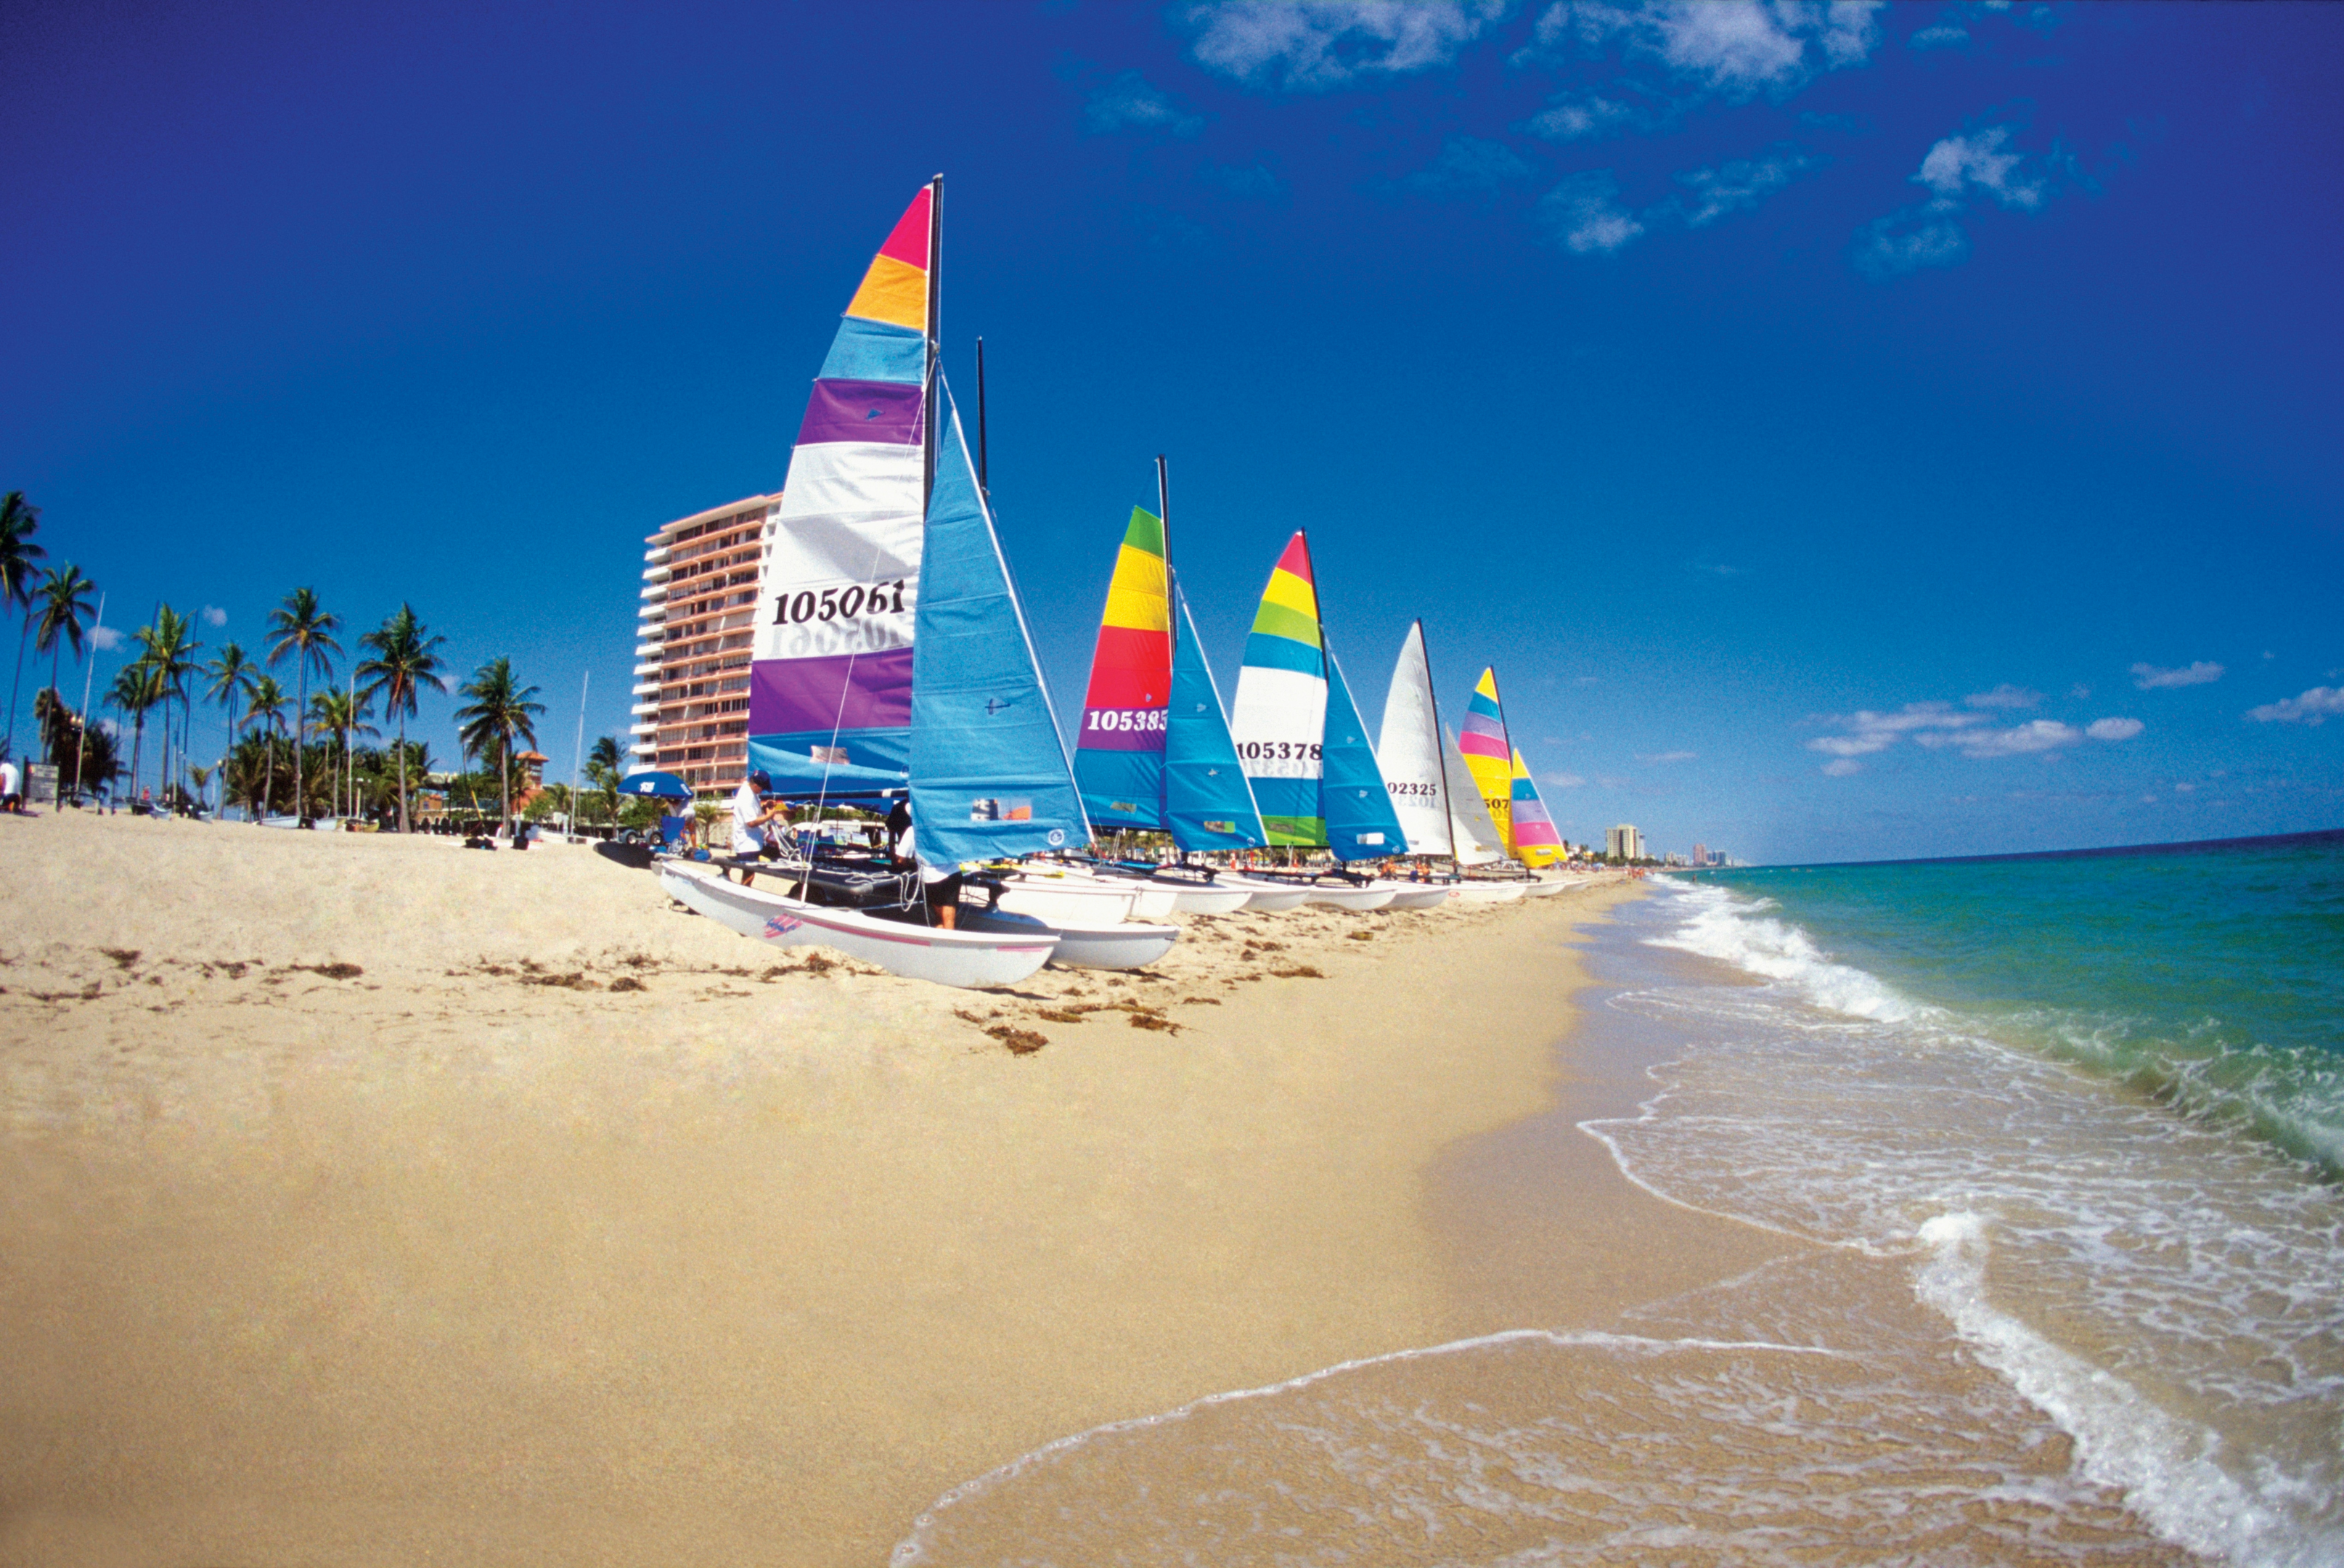 Six catamarans sitting on sand dunes in Ft. Lauderdale beach